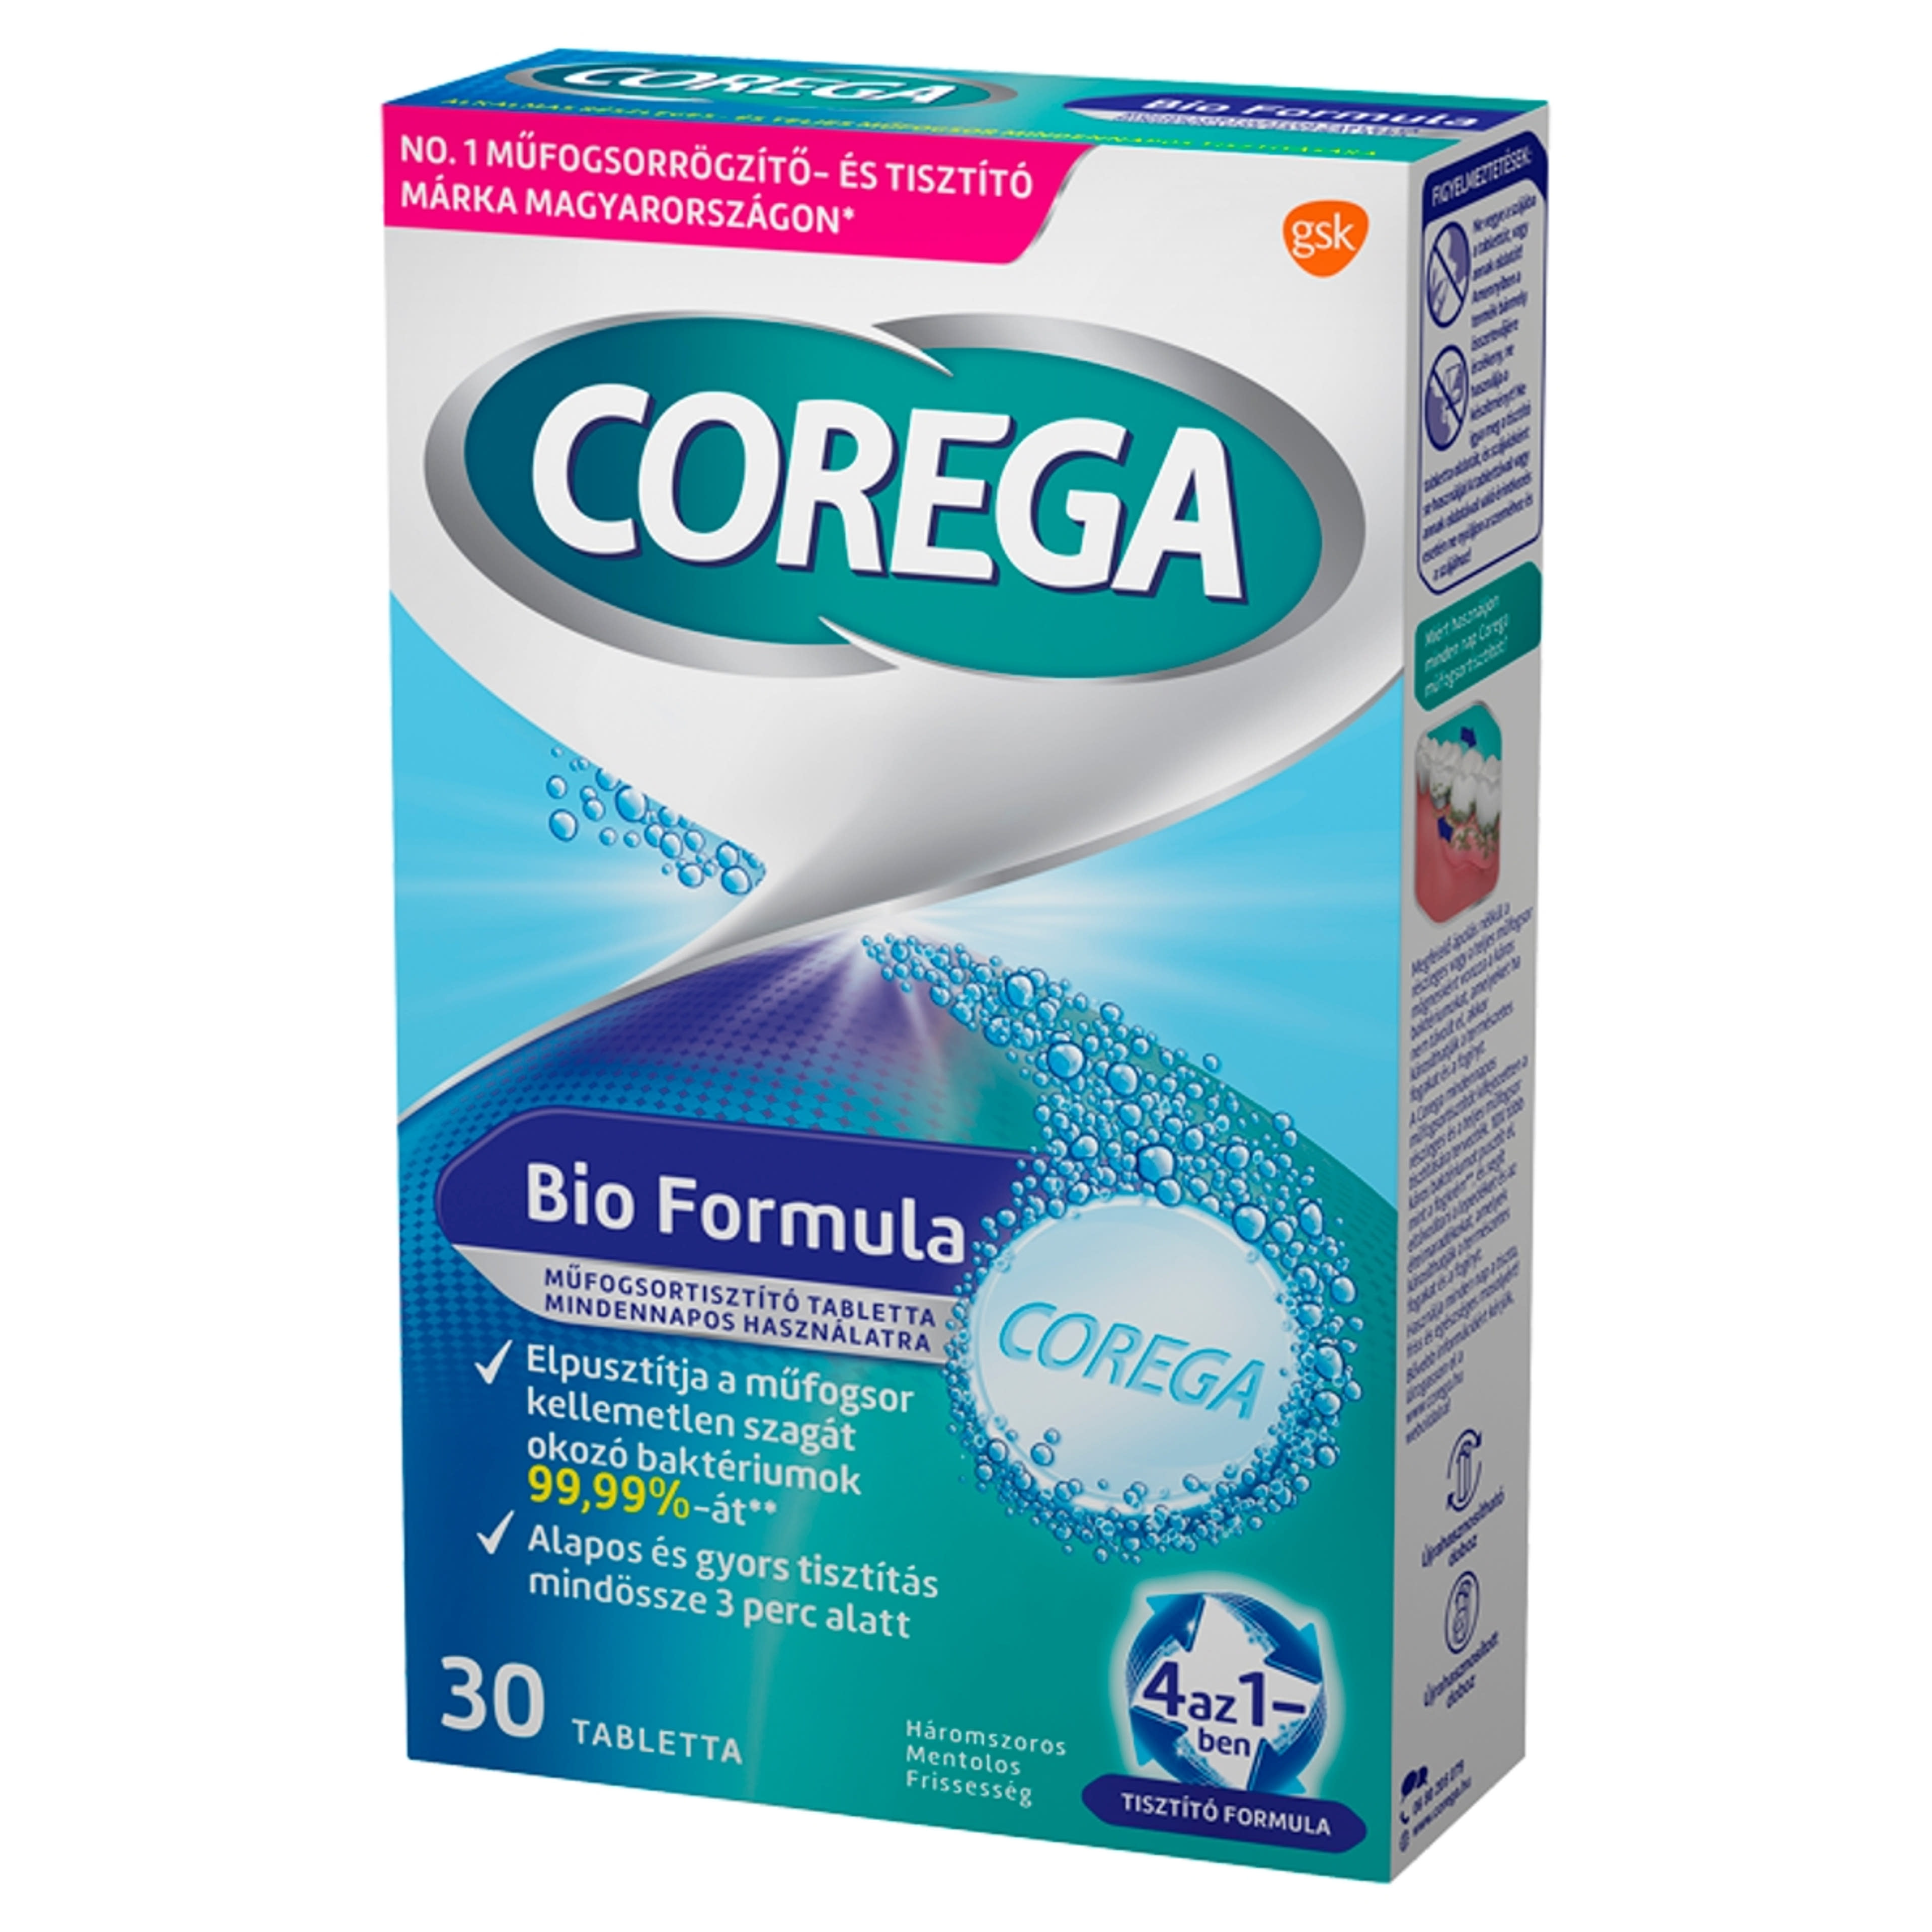 Corega Tabs Bio Formula műfogsor tisztító tabletta - 30 db-2